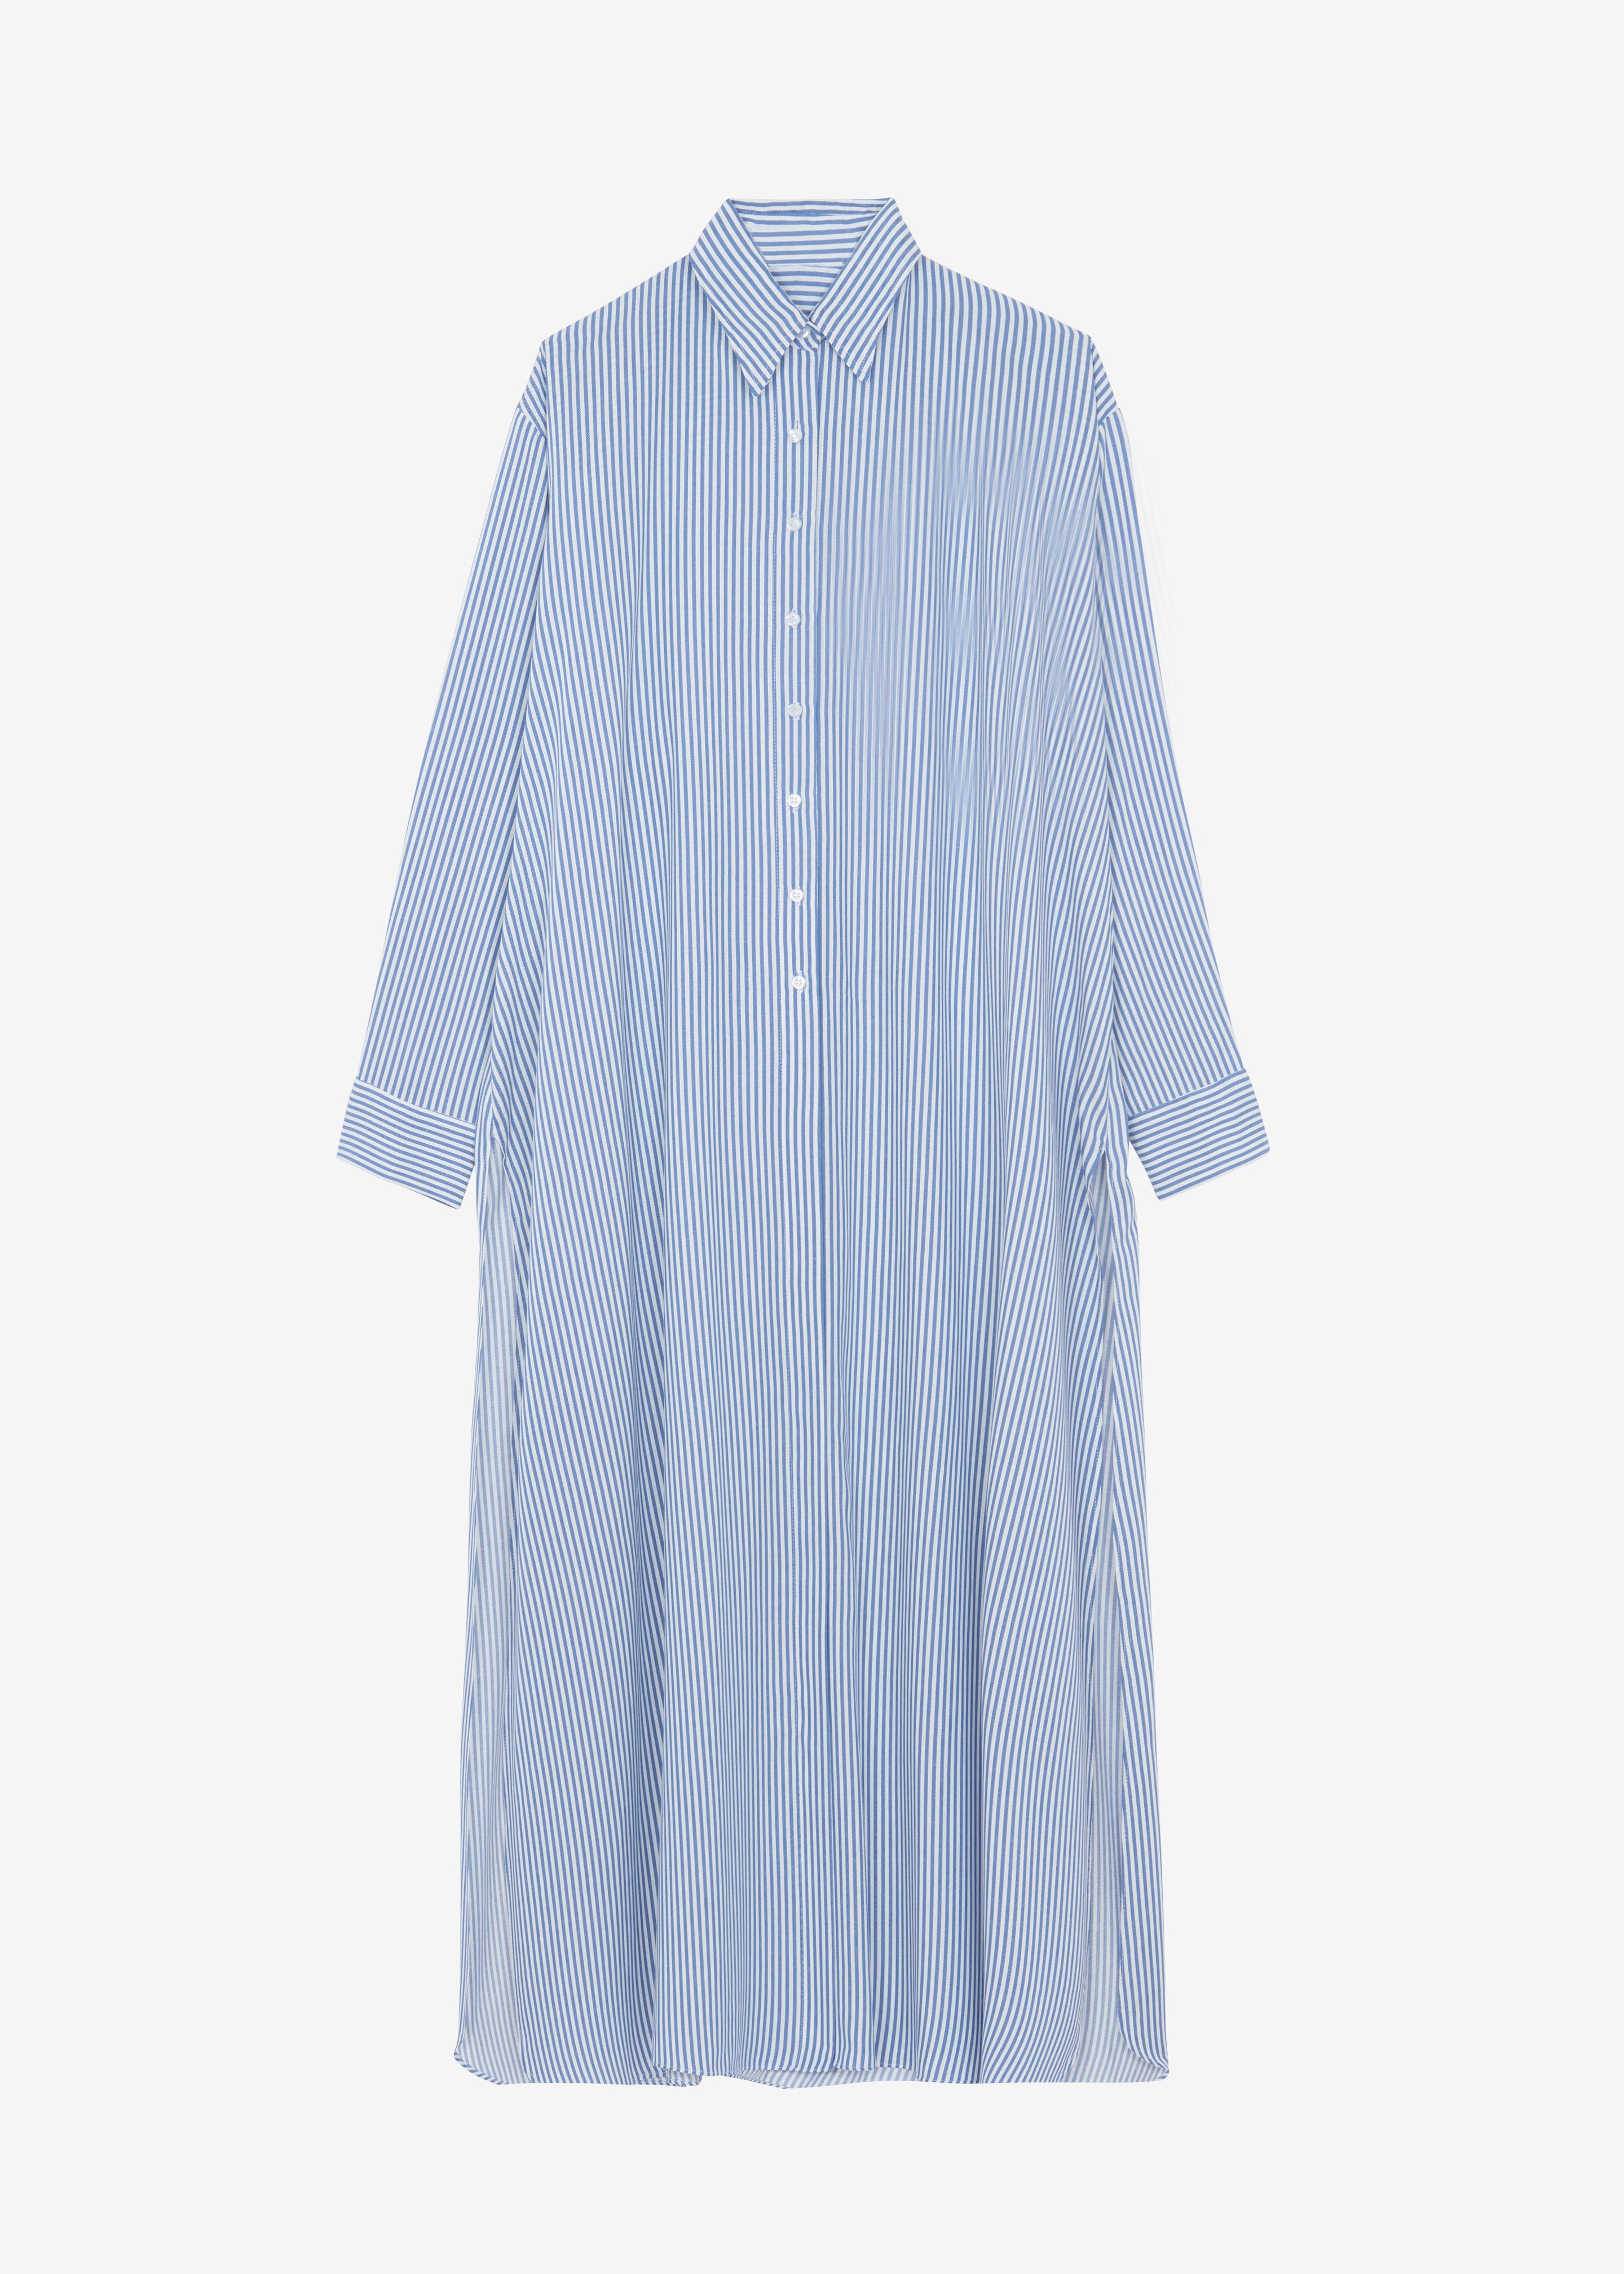 Avery Fluid Shirt Dress - White/Blue Stripe - 7